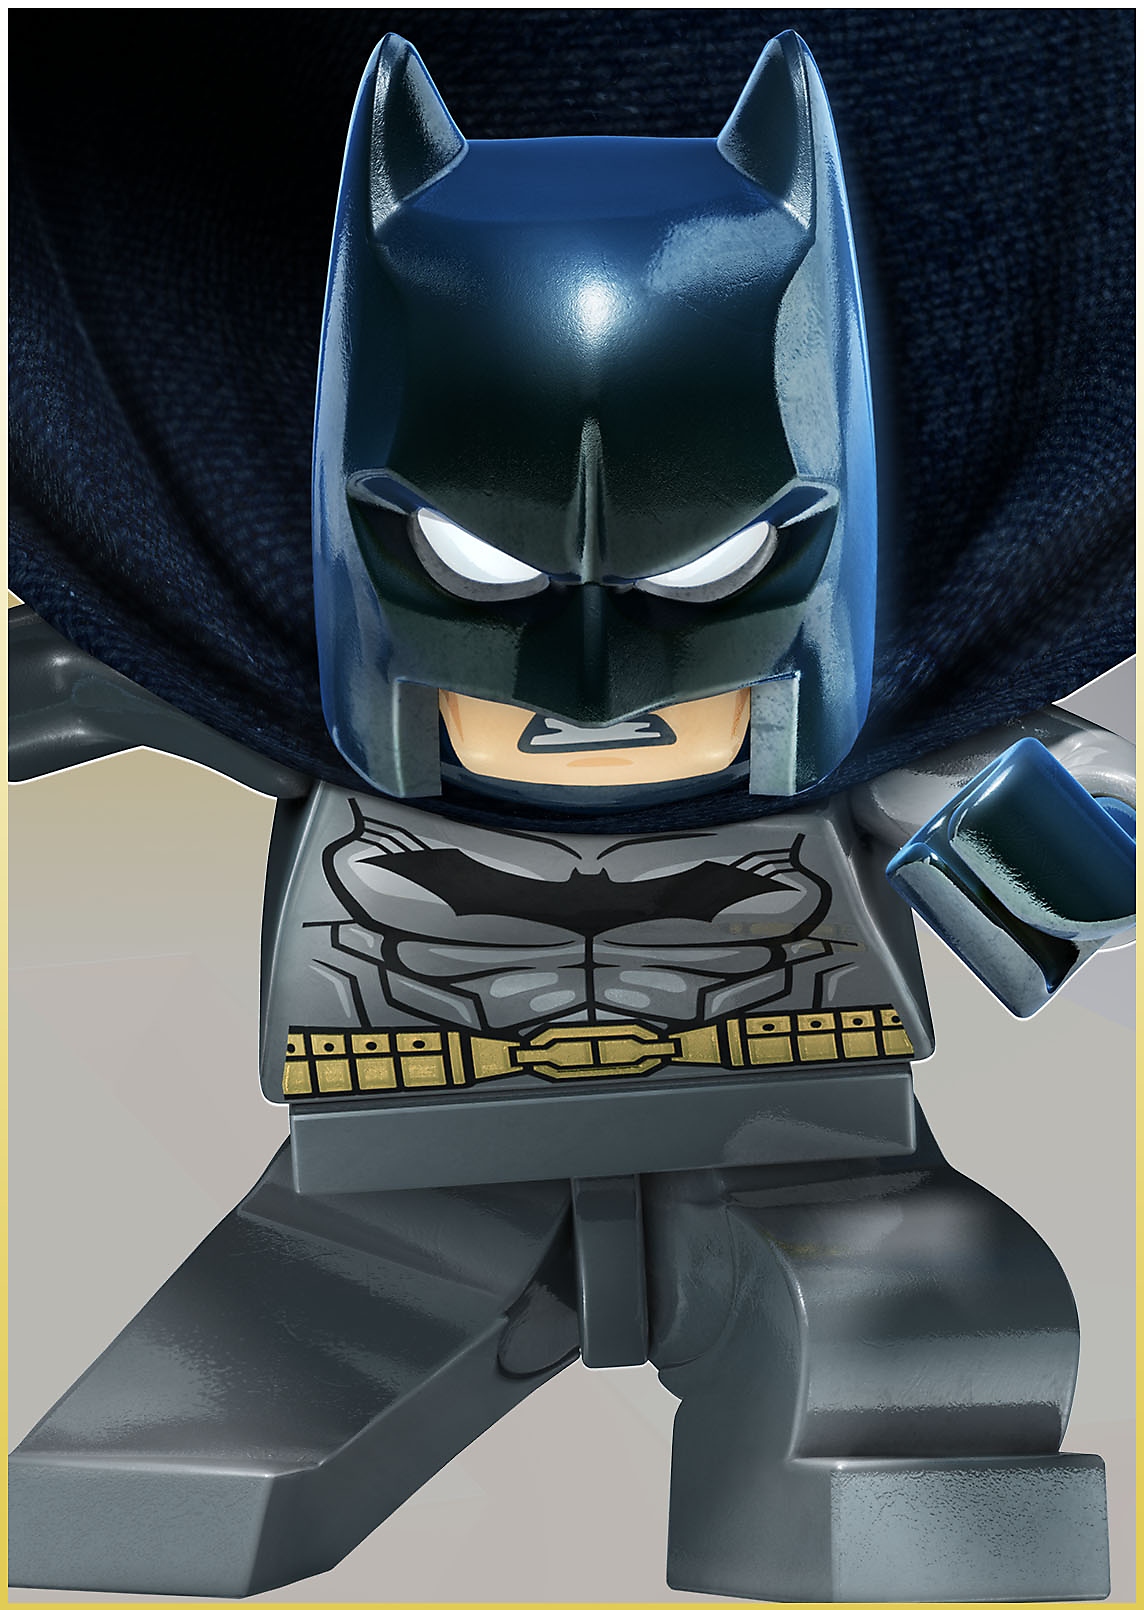 Lego Batman im Sturzflug